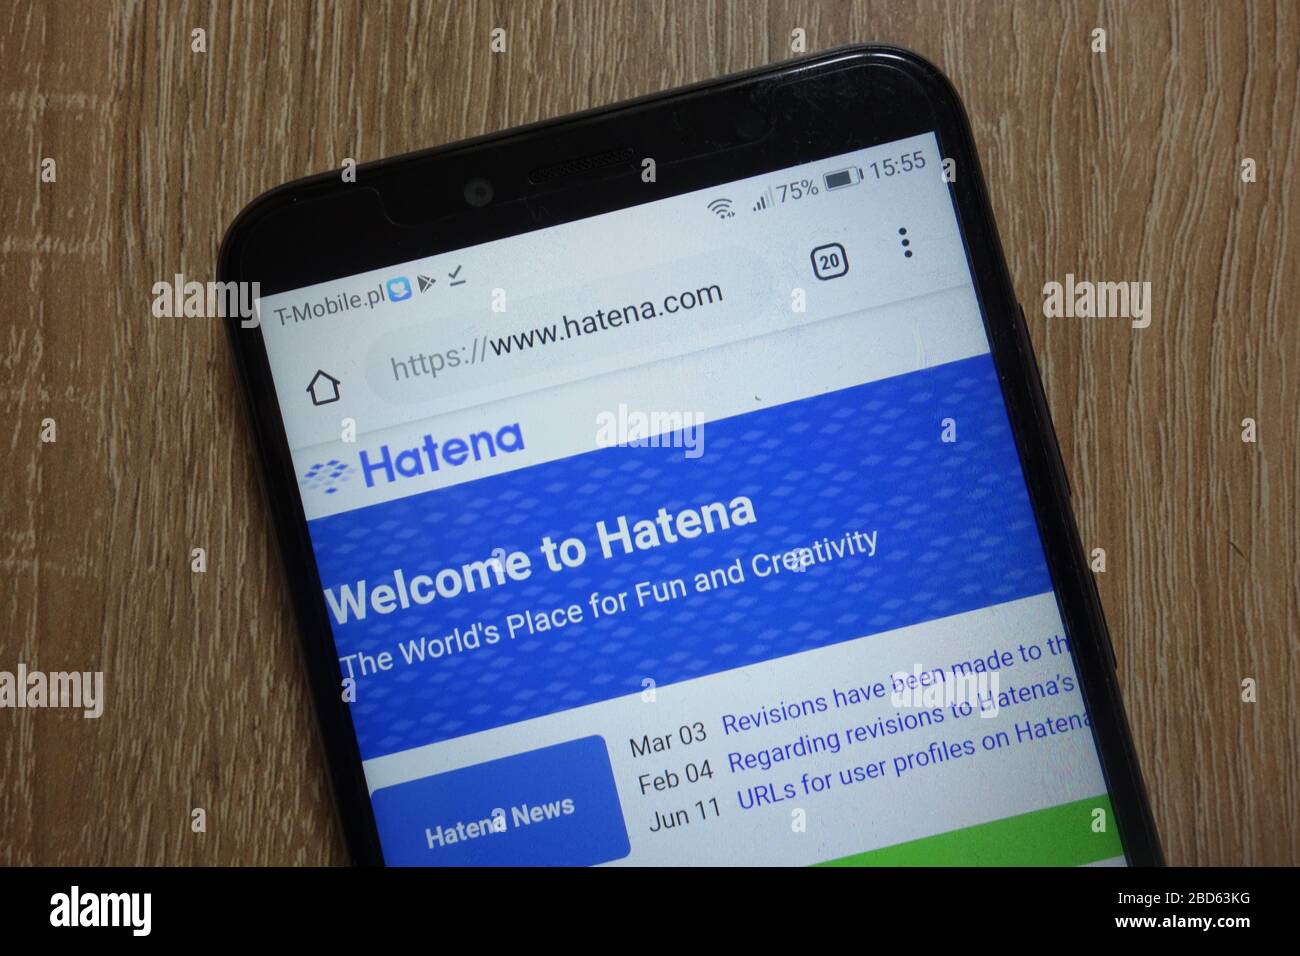 Hatena website (www.hatena.com) displayed on smartphone Stock Photo